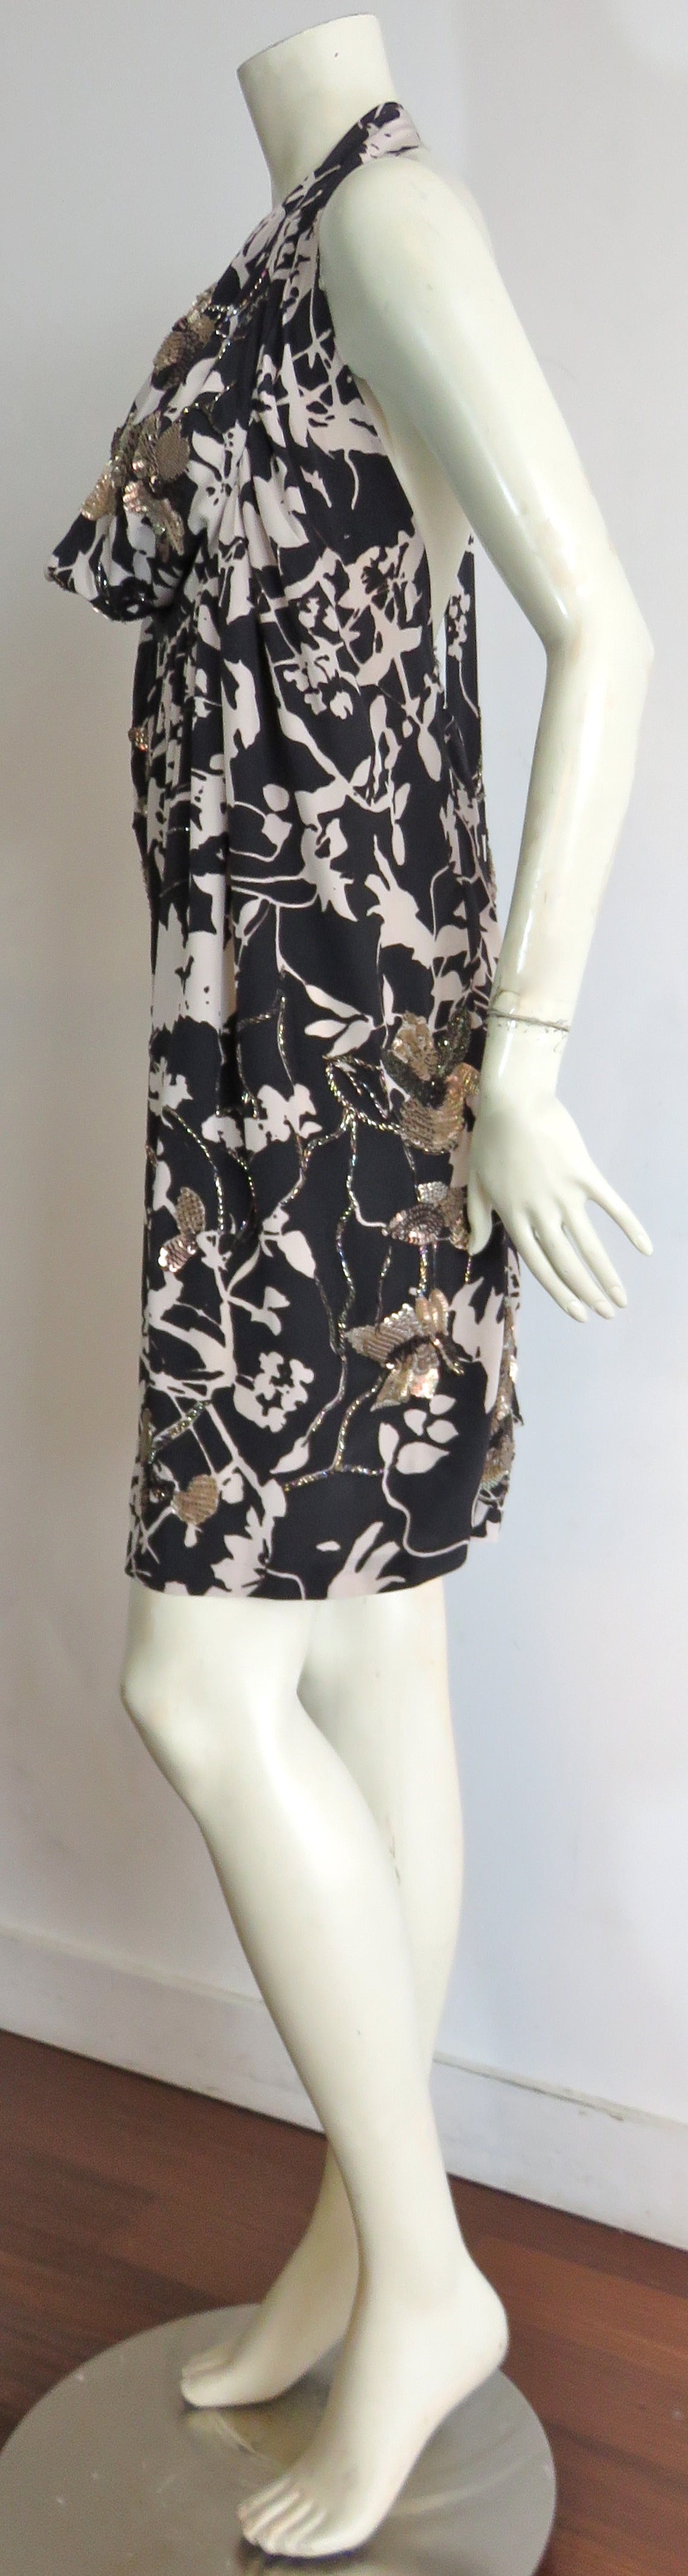 DRIES VAN NOTEN Embellished silk floral print dress - unworn 2